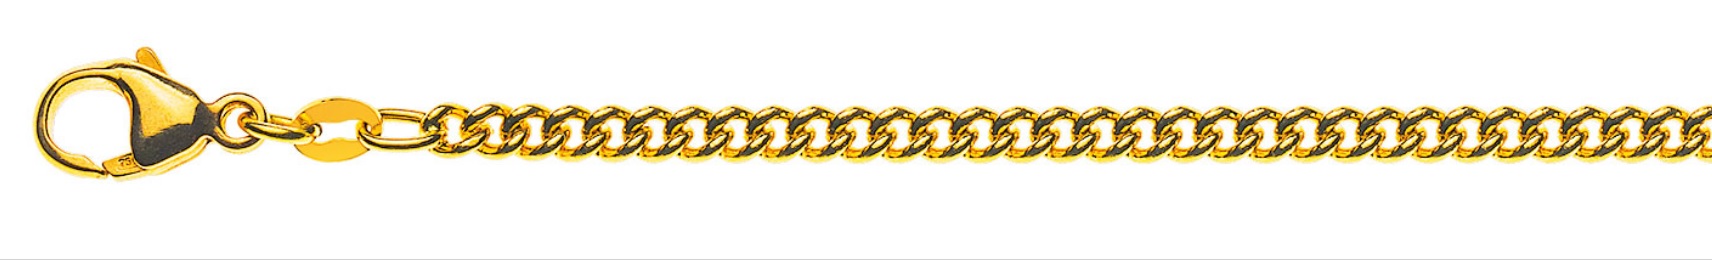 AURONOS Prestige Necklace yellow gold 18K round curb chain 60cm 2.8mm